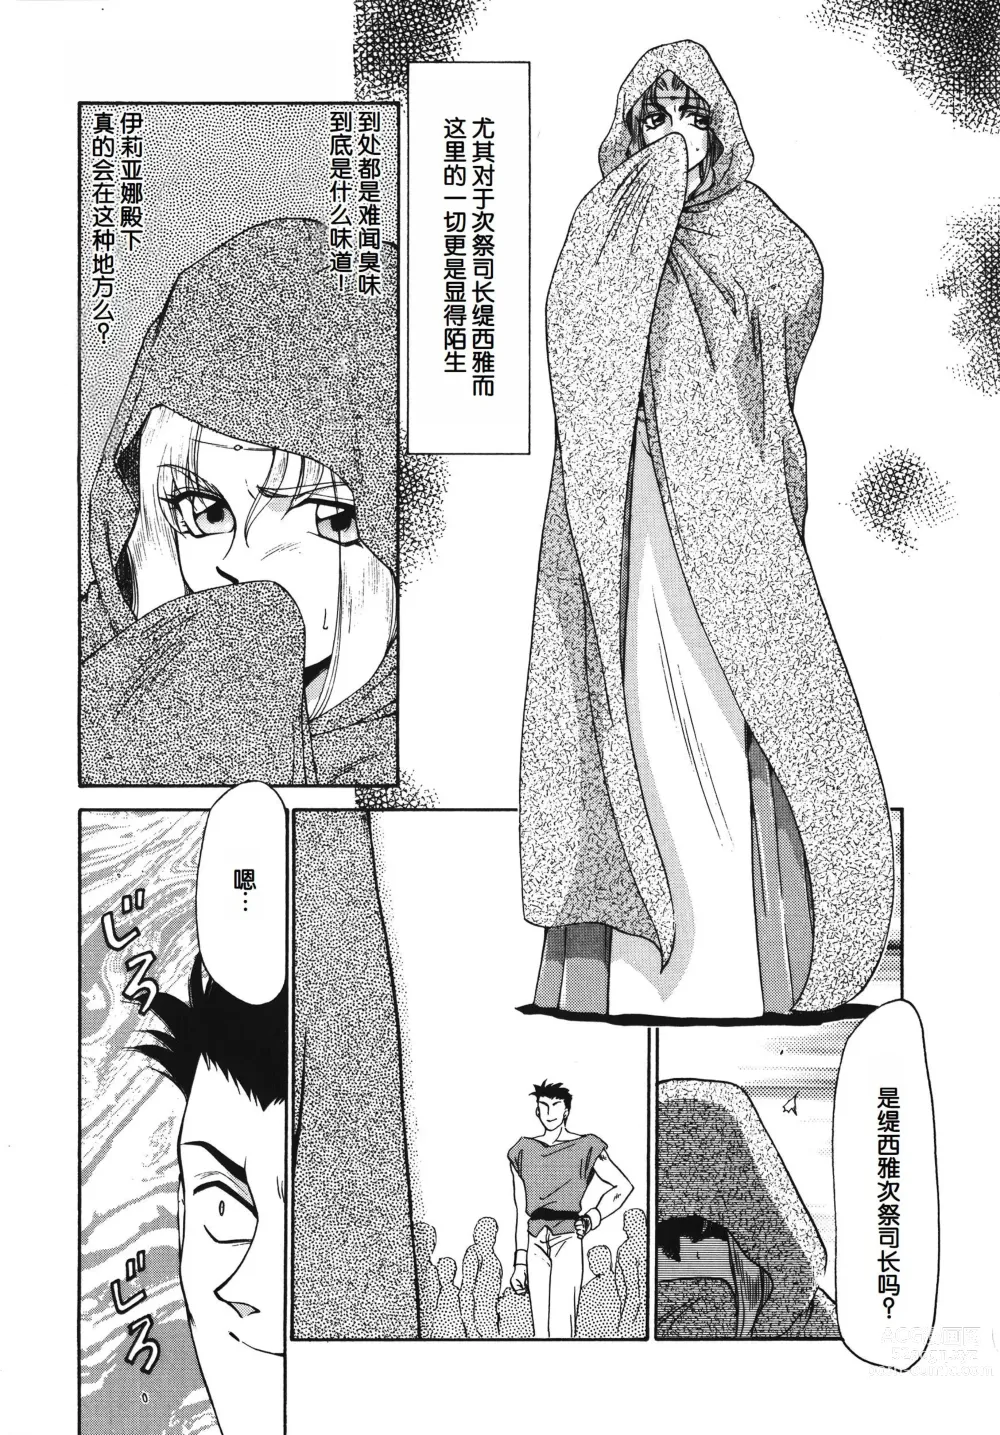 Page 17 of manga Bad Moon...